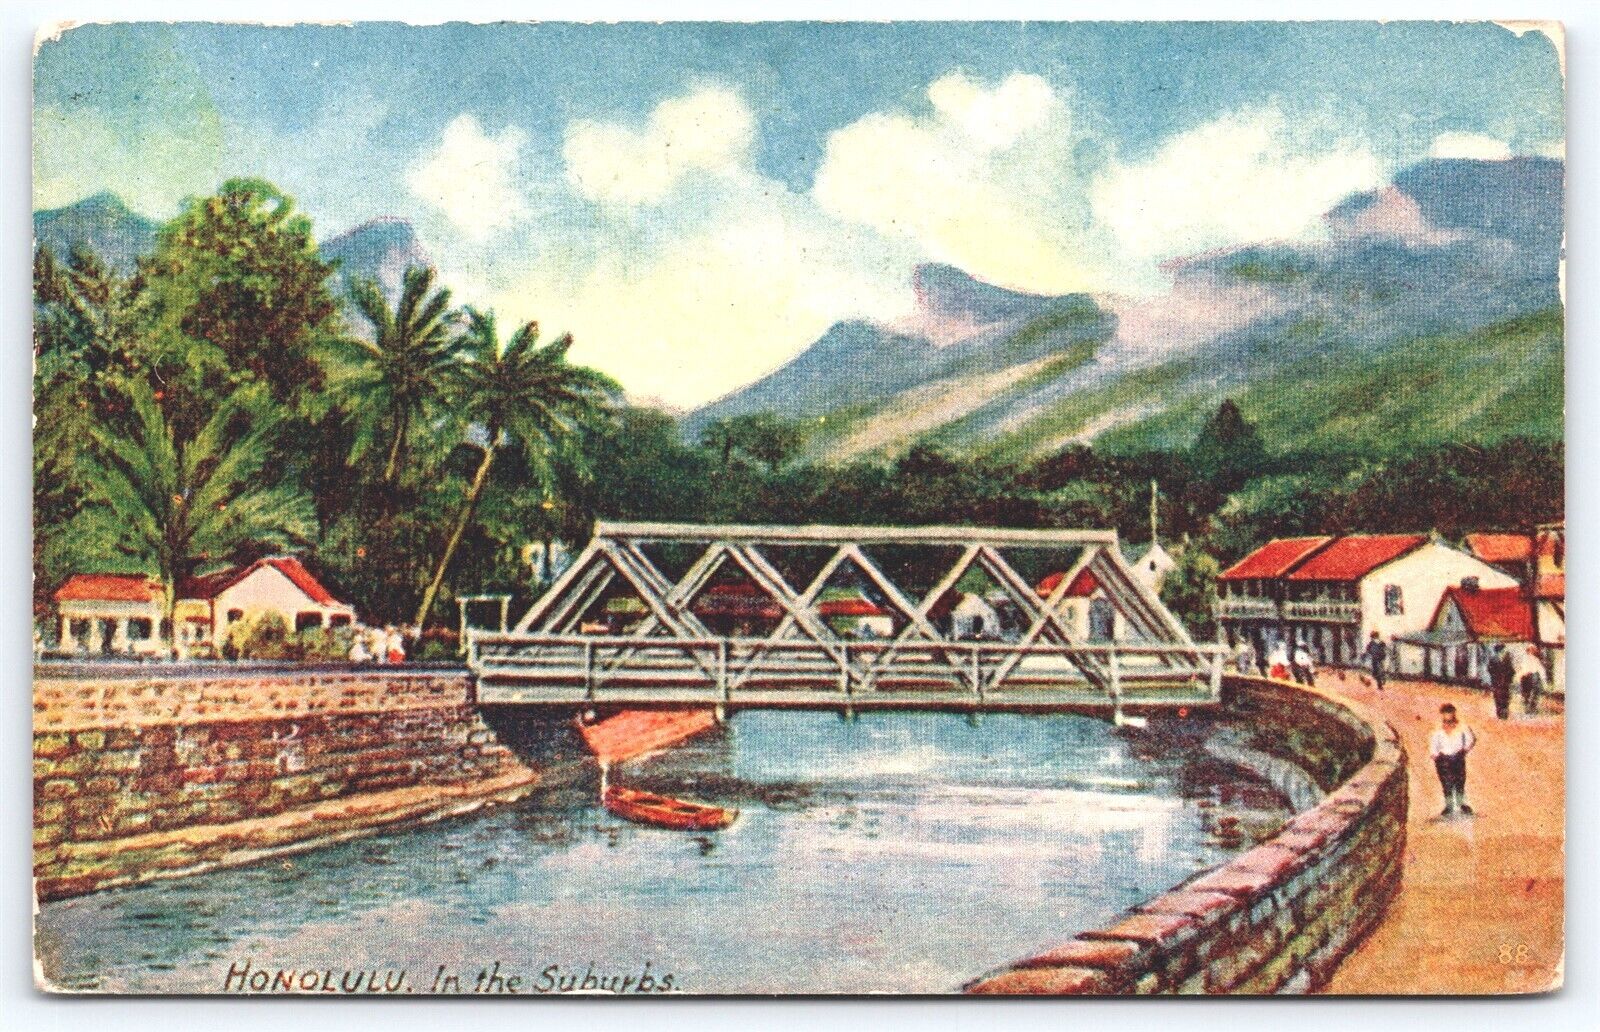 HI Honolulu In The Suburbs, Bridge, Mountains, People, DB Posted 1909